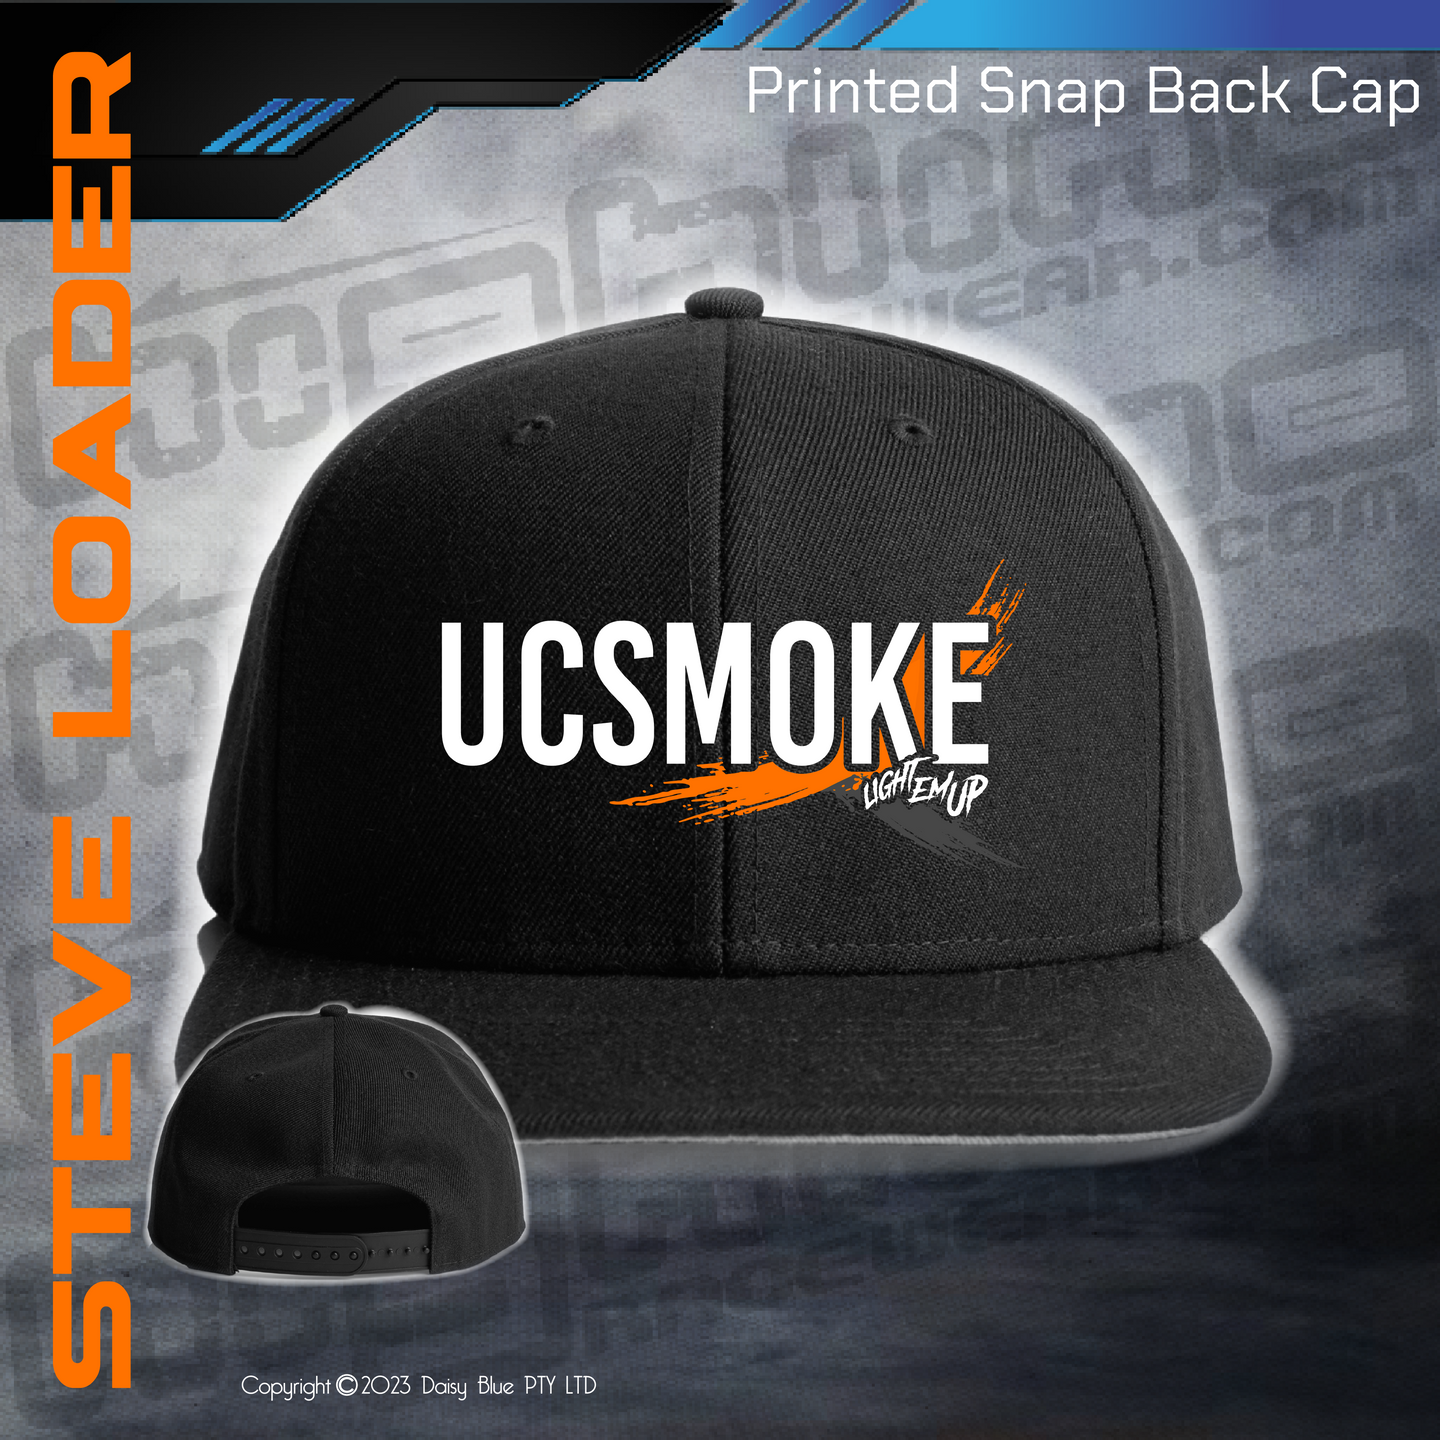 Printed Snap Back CAP - UCSmoke Light Em Up